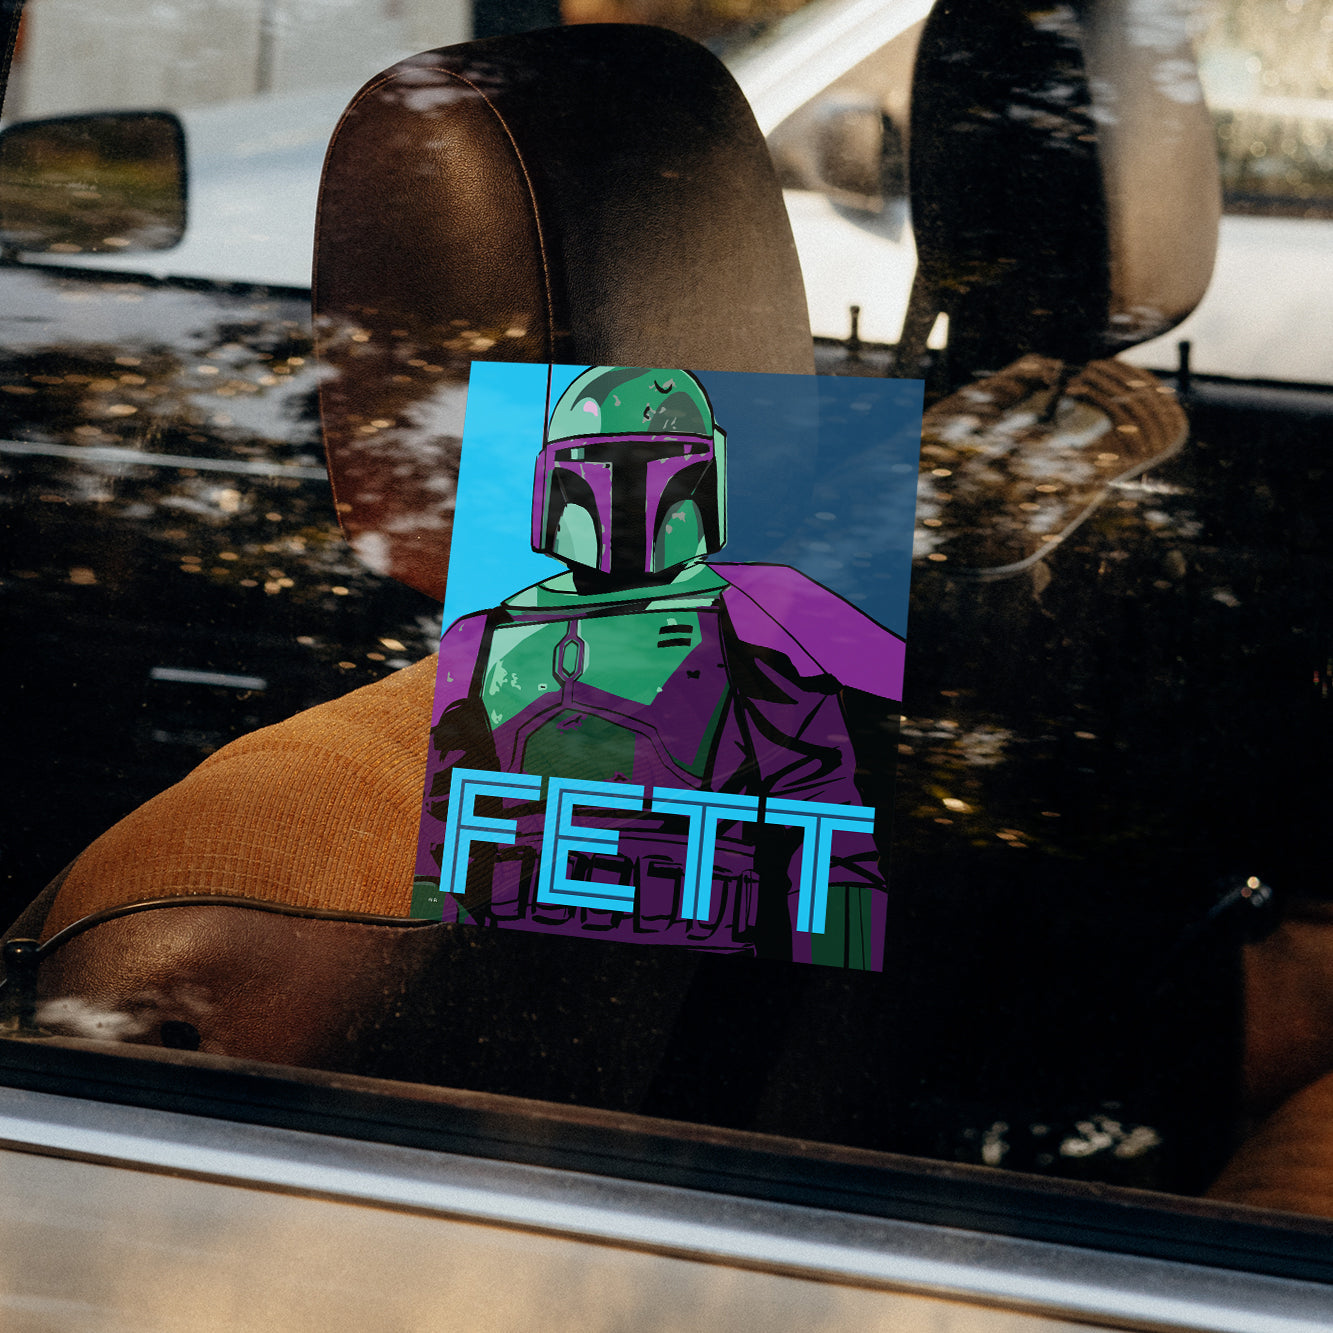 Boba Fett FETT Pop Art Window Cling - Officially Licensed Star Wars Removable Window Static Decal